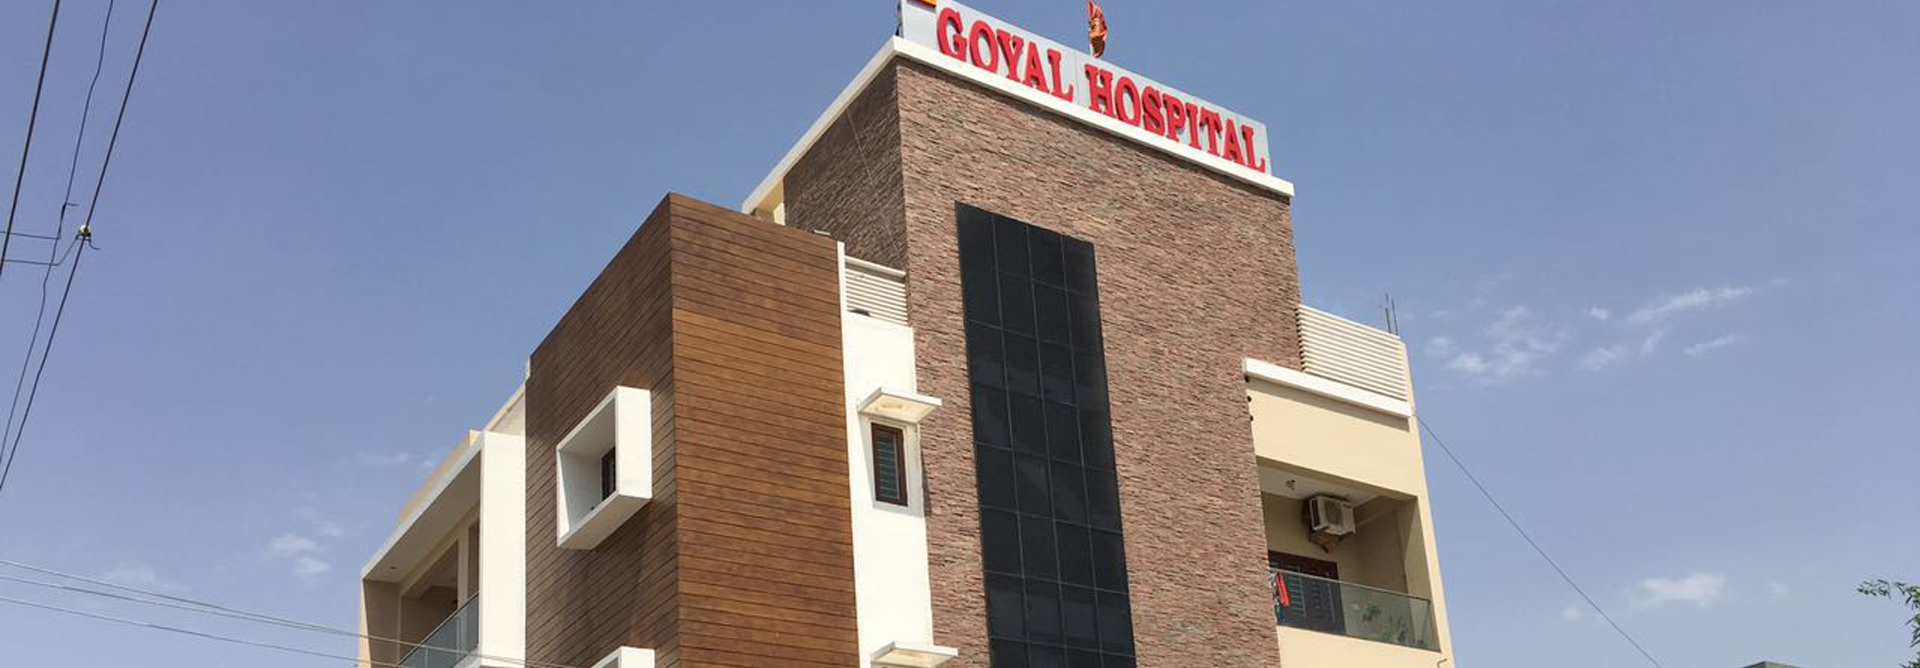 Goyal Hospital Medical Services | Hospitals